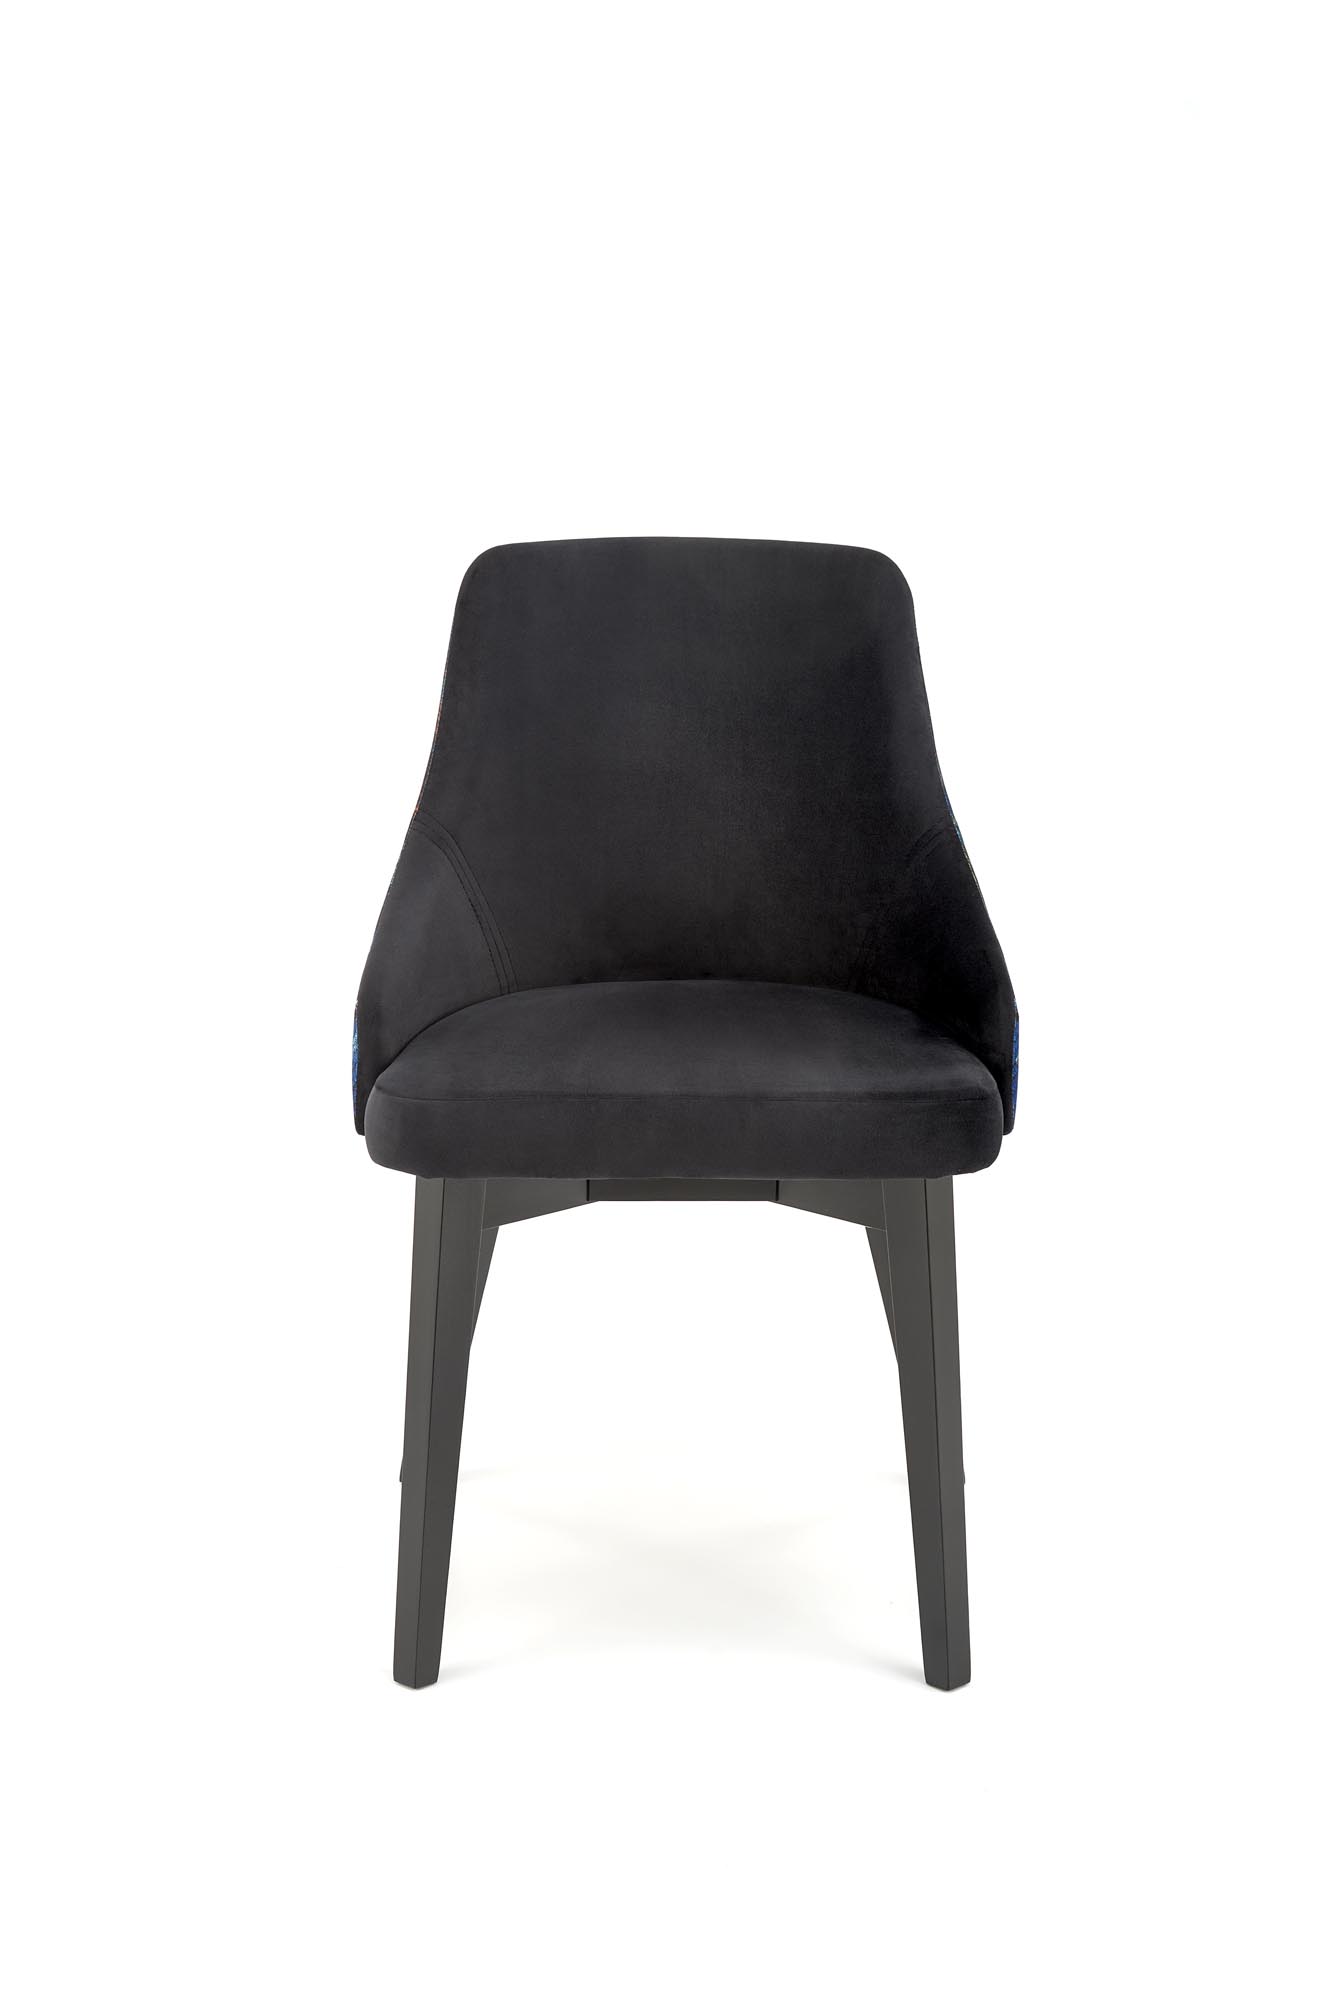 ENDO szék - fekete / csap: BLUVEL 19 (fekete) (1p=1db) Židle čalouněné endo - Fekete